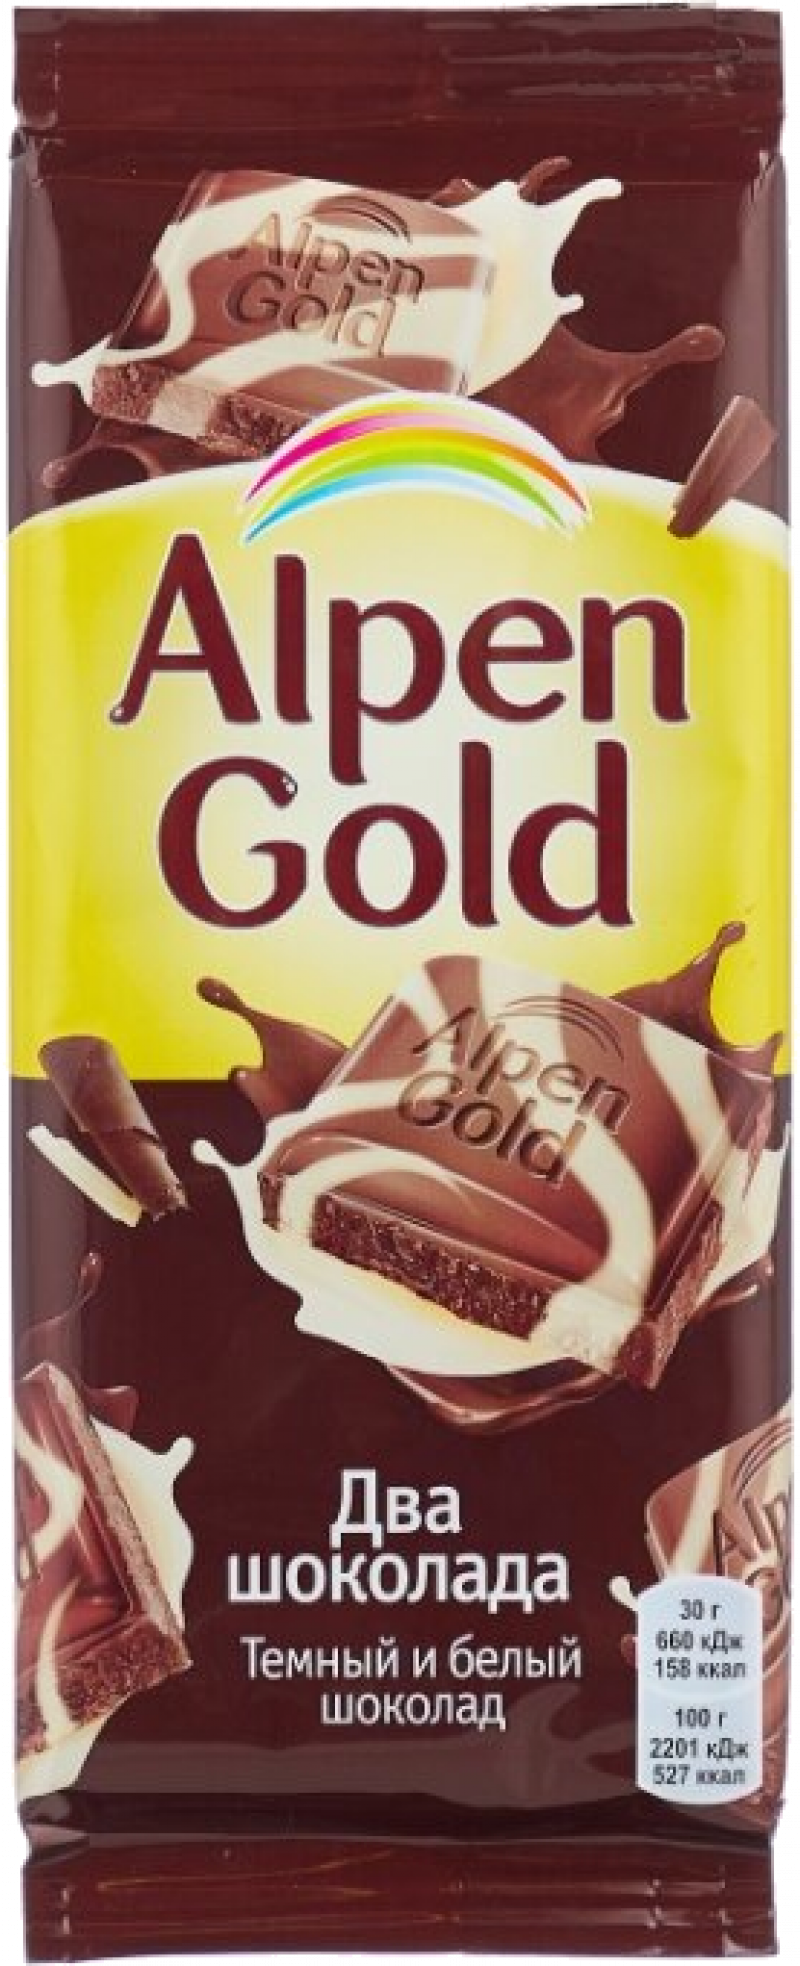 Шоколад ТМ Alpen Gold Два Шоколада темный и белый 90г